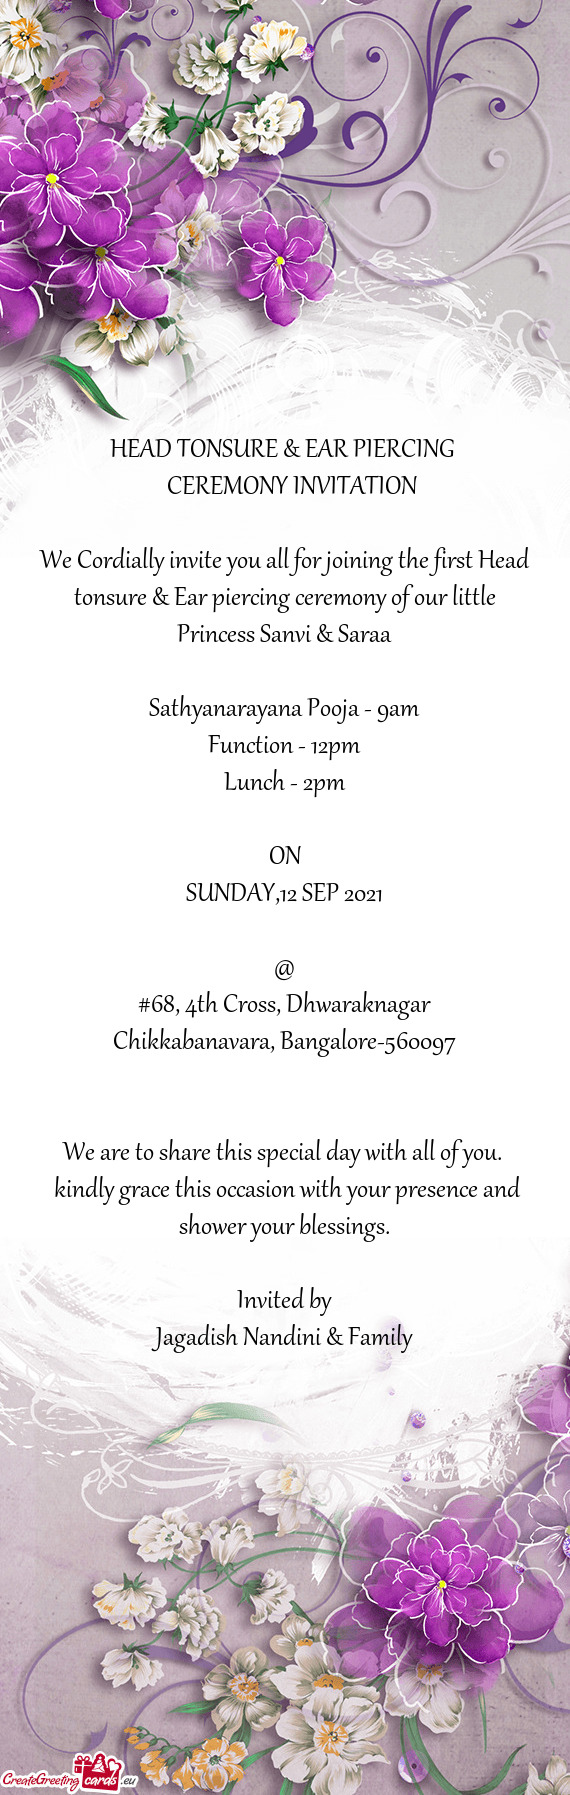 Sathyanarayana Pooja - 9am